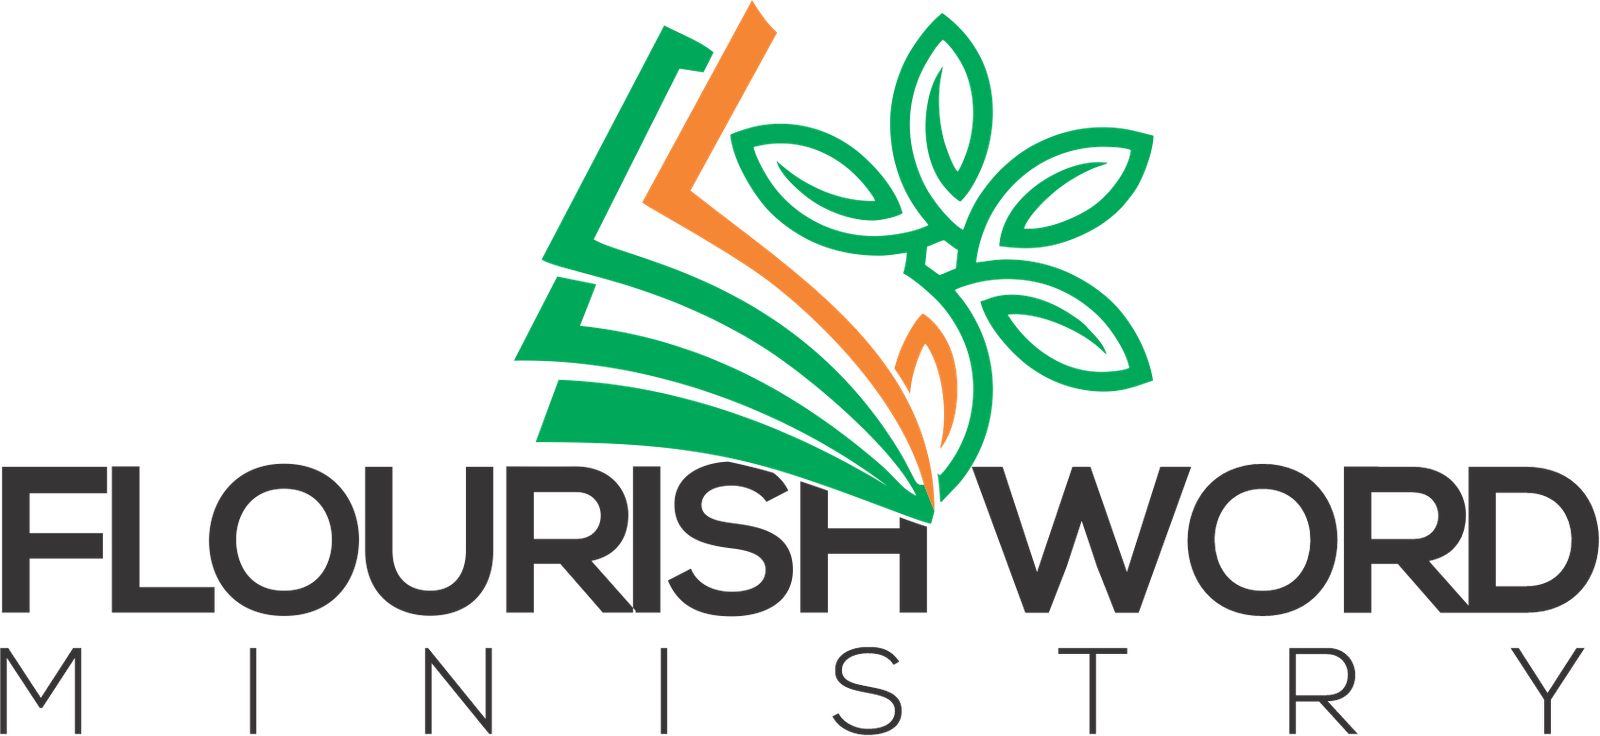 Flourish word logo black web